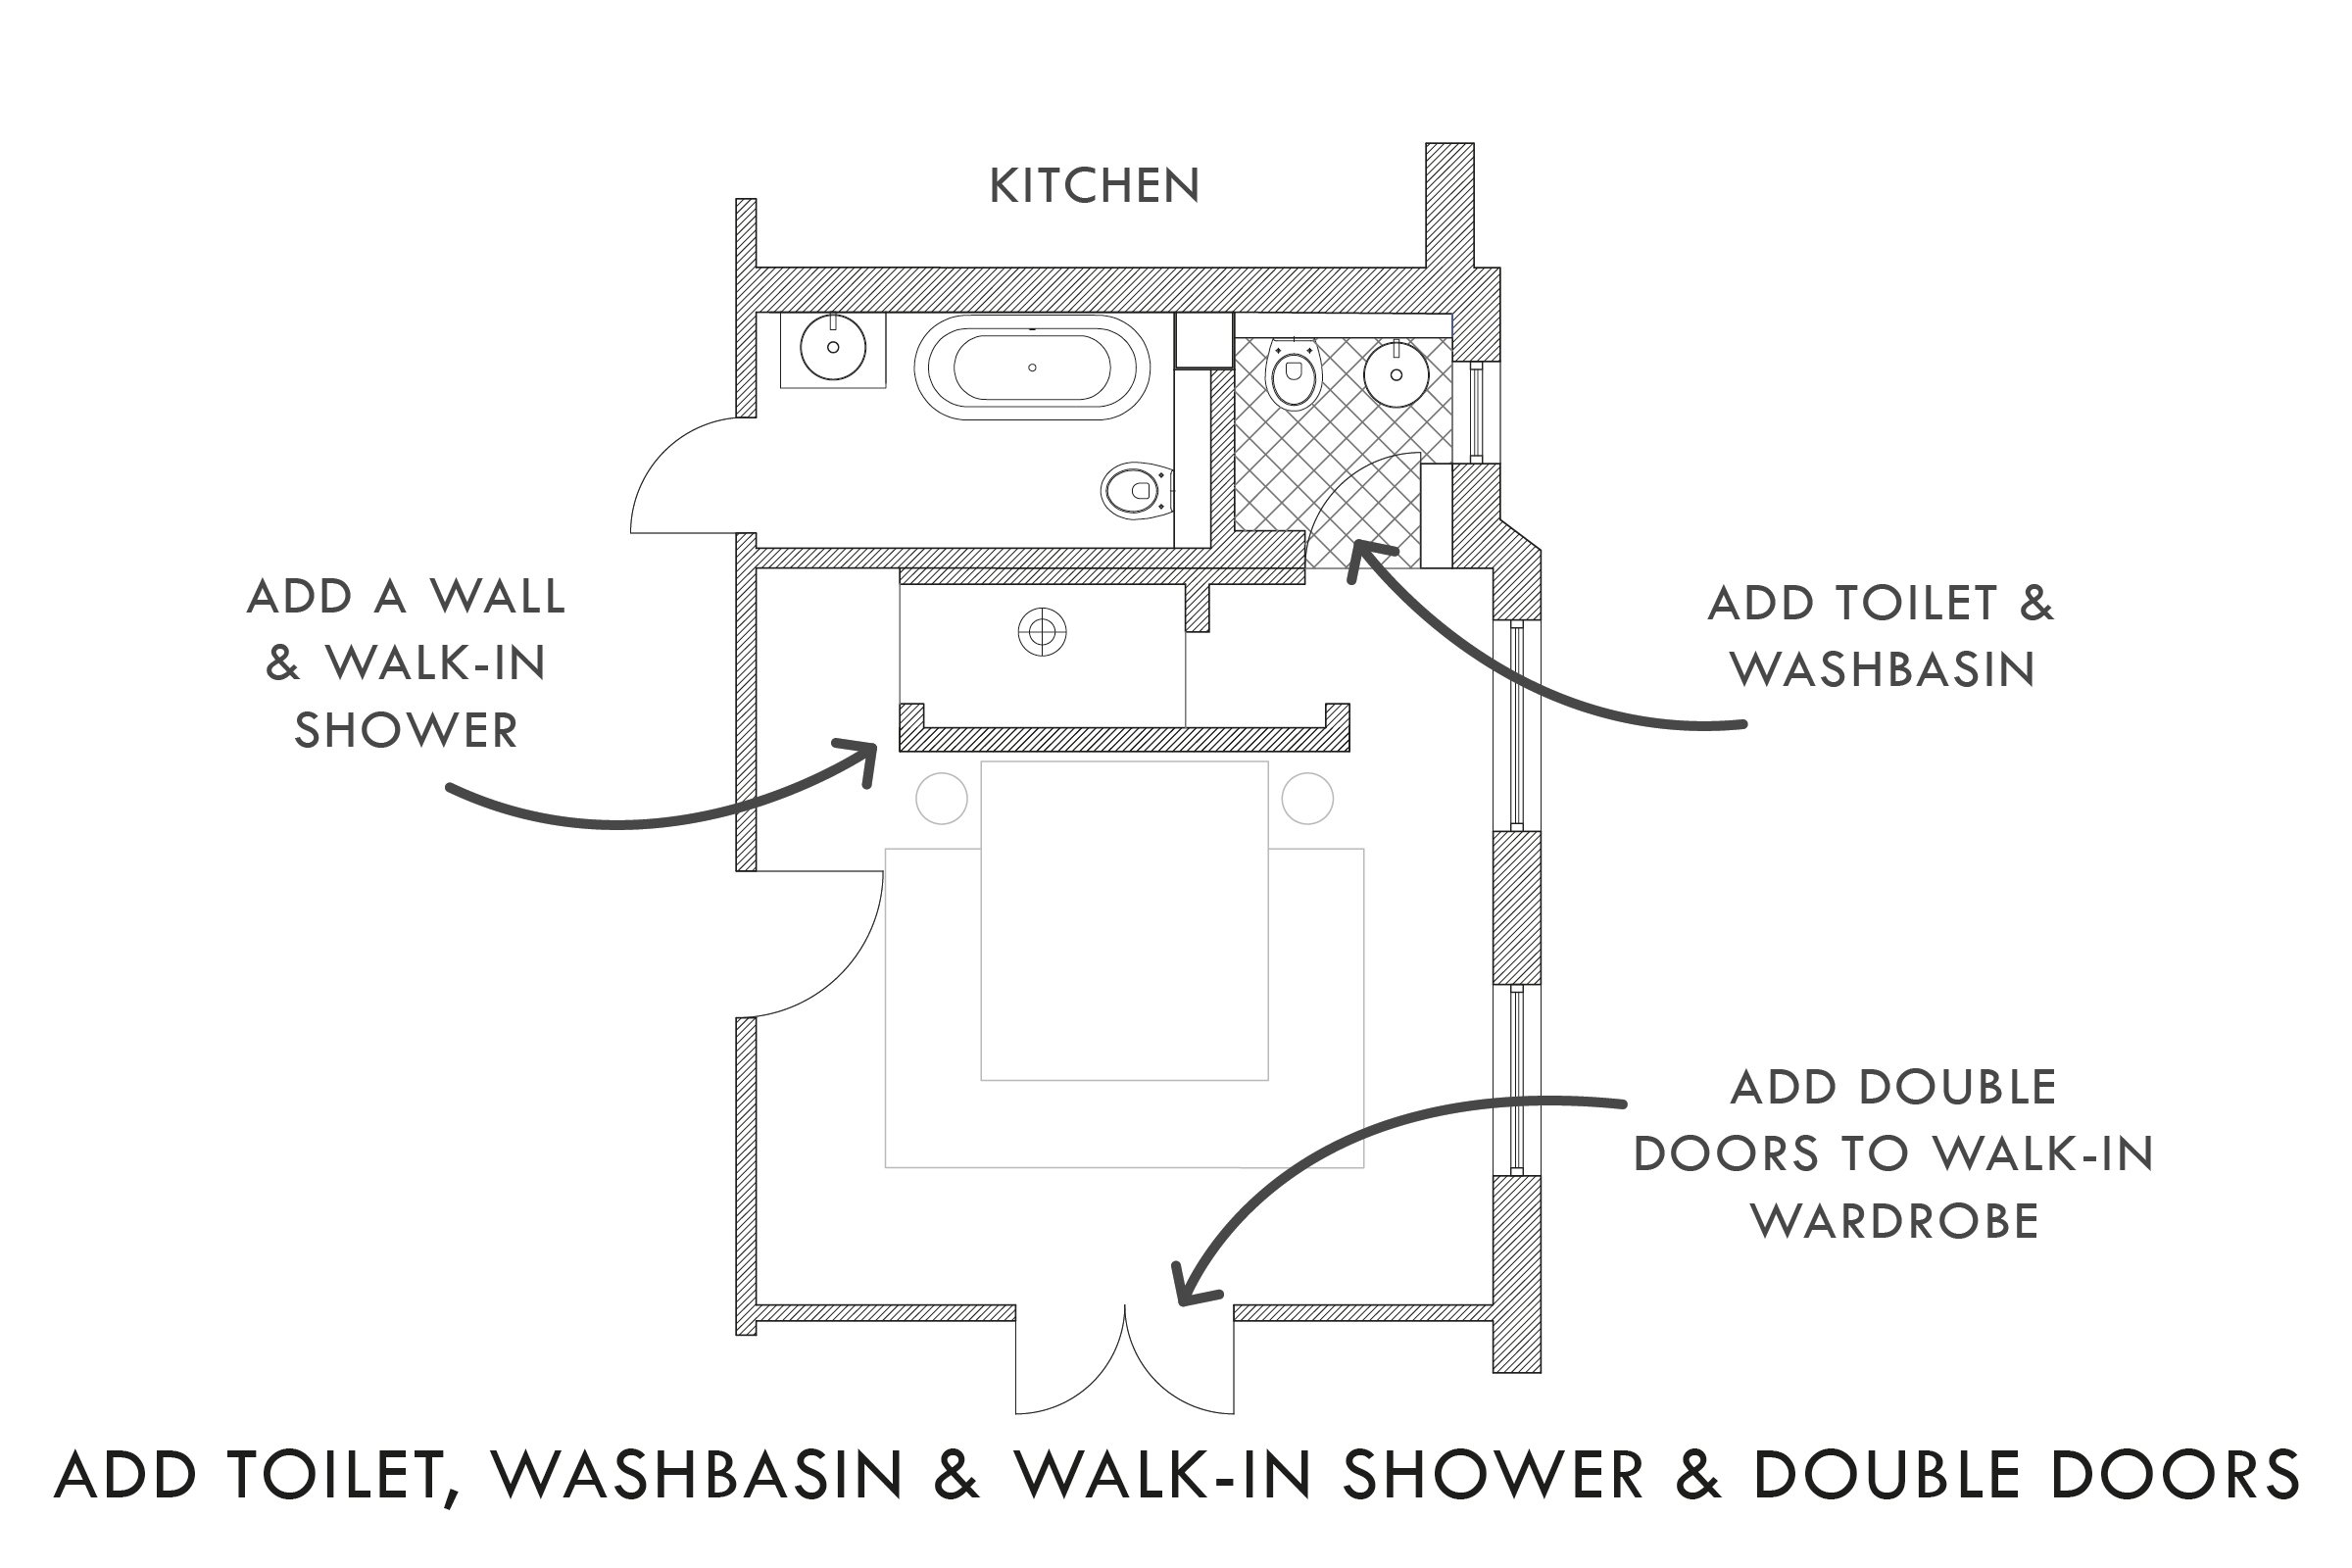 Add Toilet, Washbasin, Walk-In Shower & Wardrobe | Bathroom Makeover Plans | Little House On The Corner